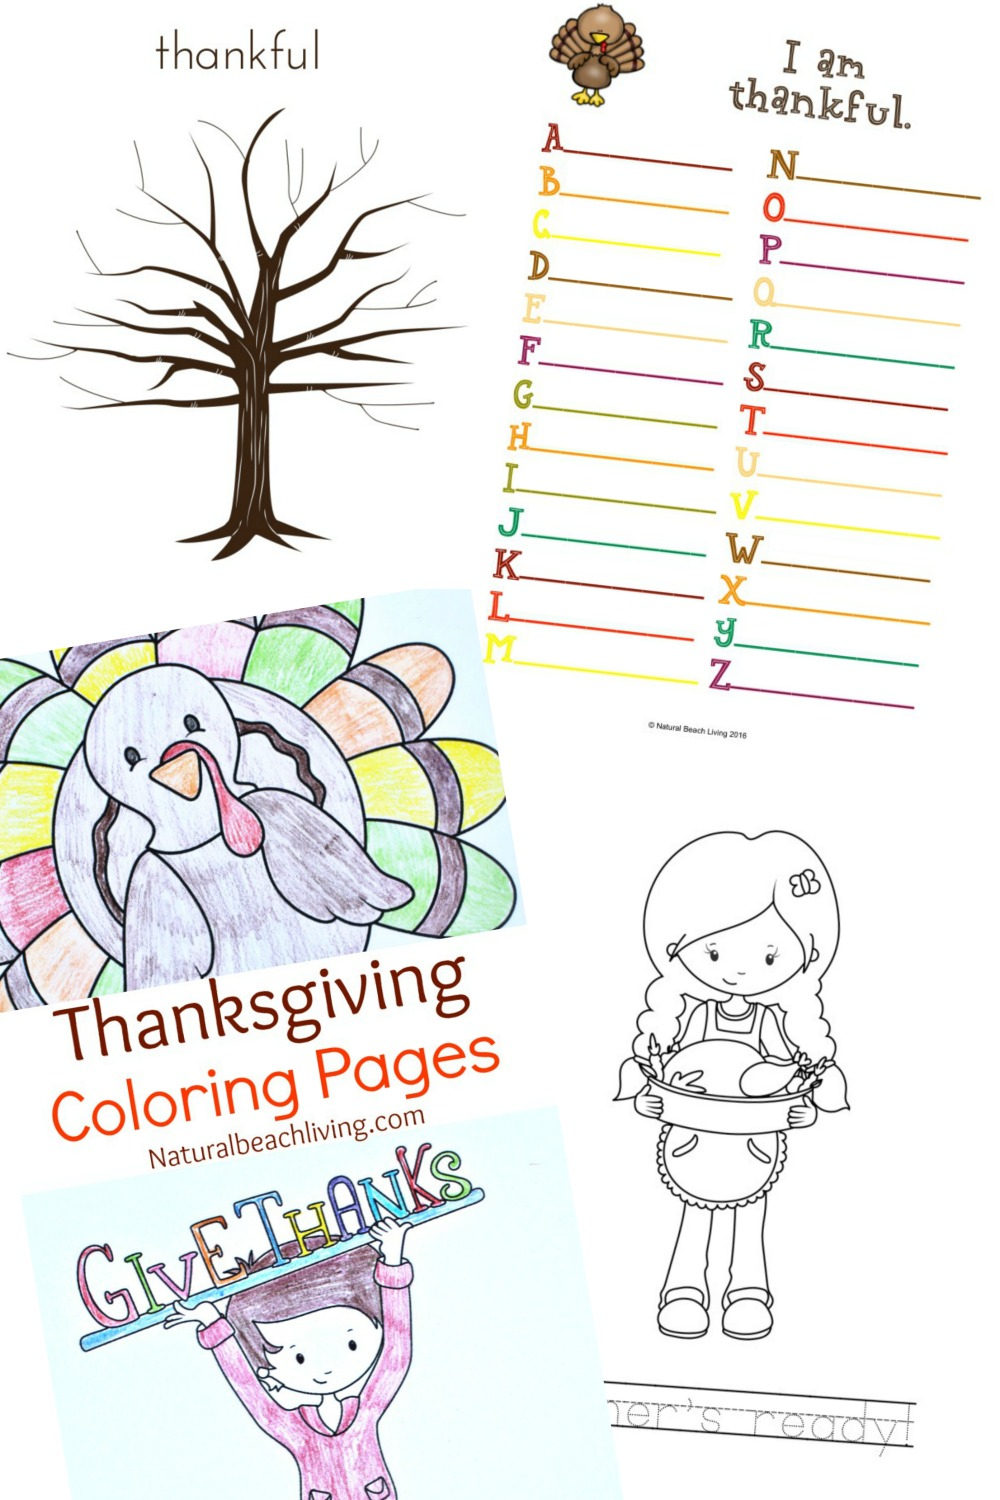 Thanksgiving Printables For Kids - Natural Beach Living - Free Printable Thanksgiving Activities For Preschoolers